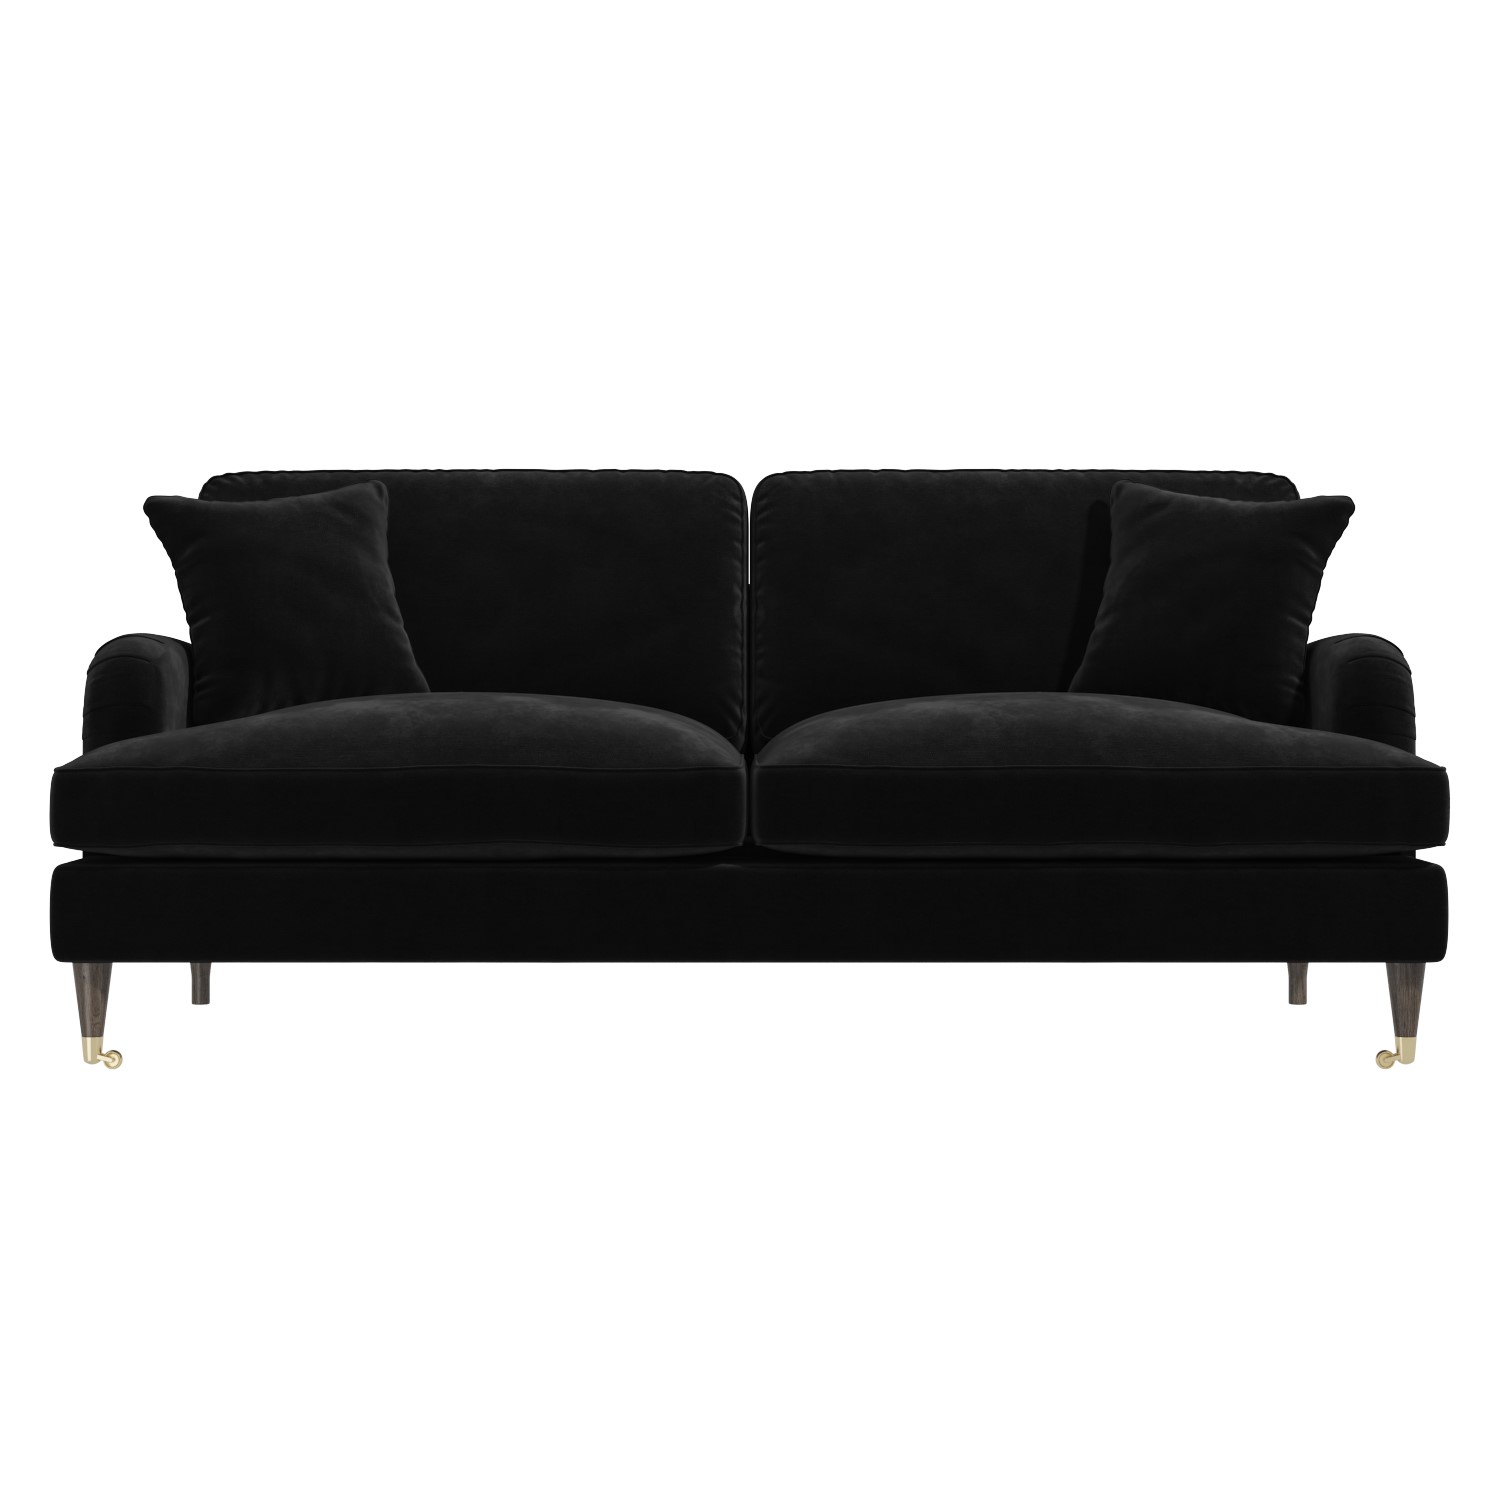 Read more about Black velvet 3 seater sofa payton